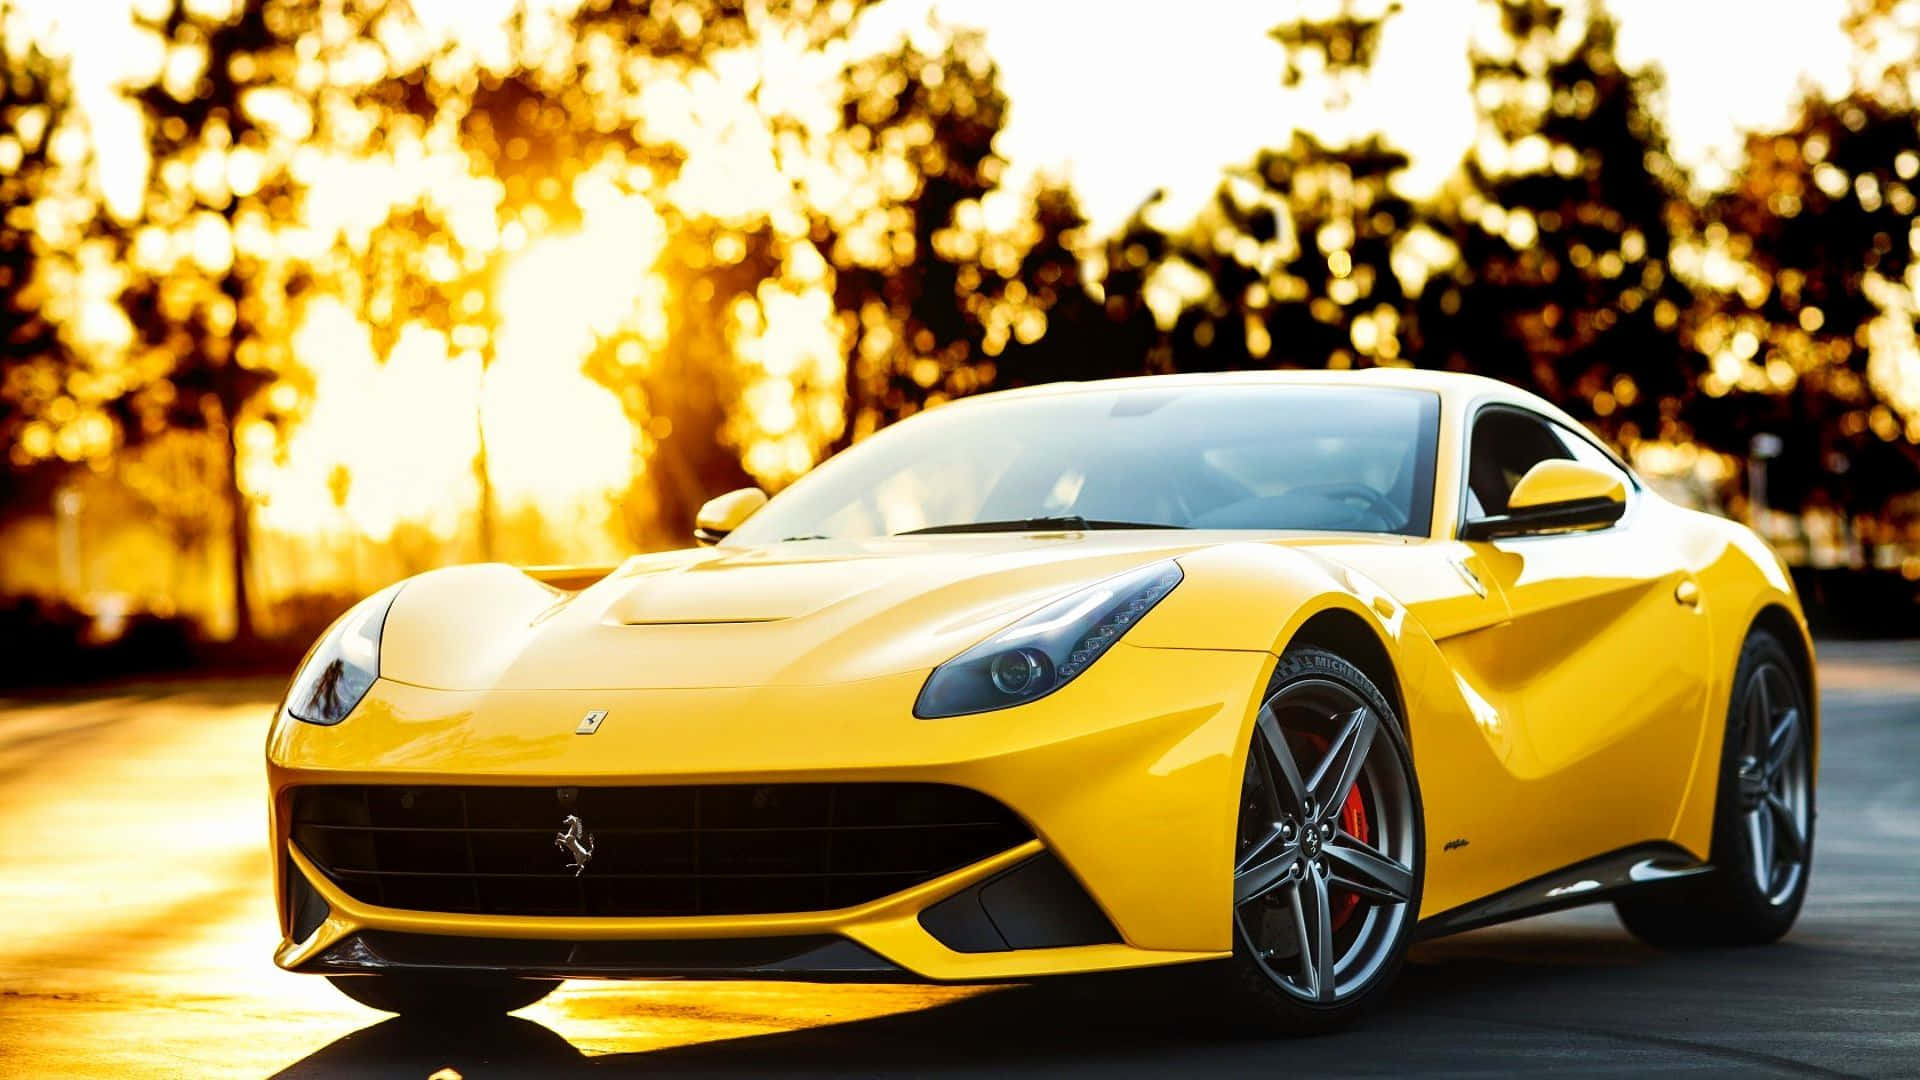 Captivating Yellow Sports Car Wallpaper